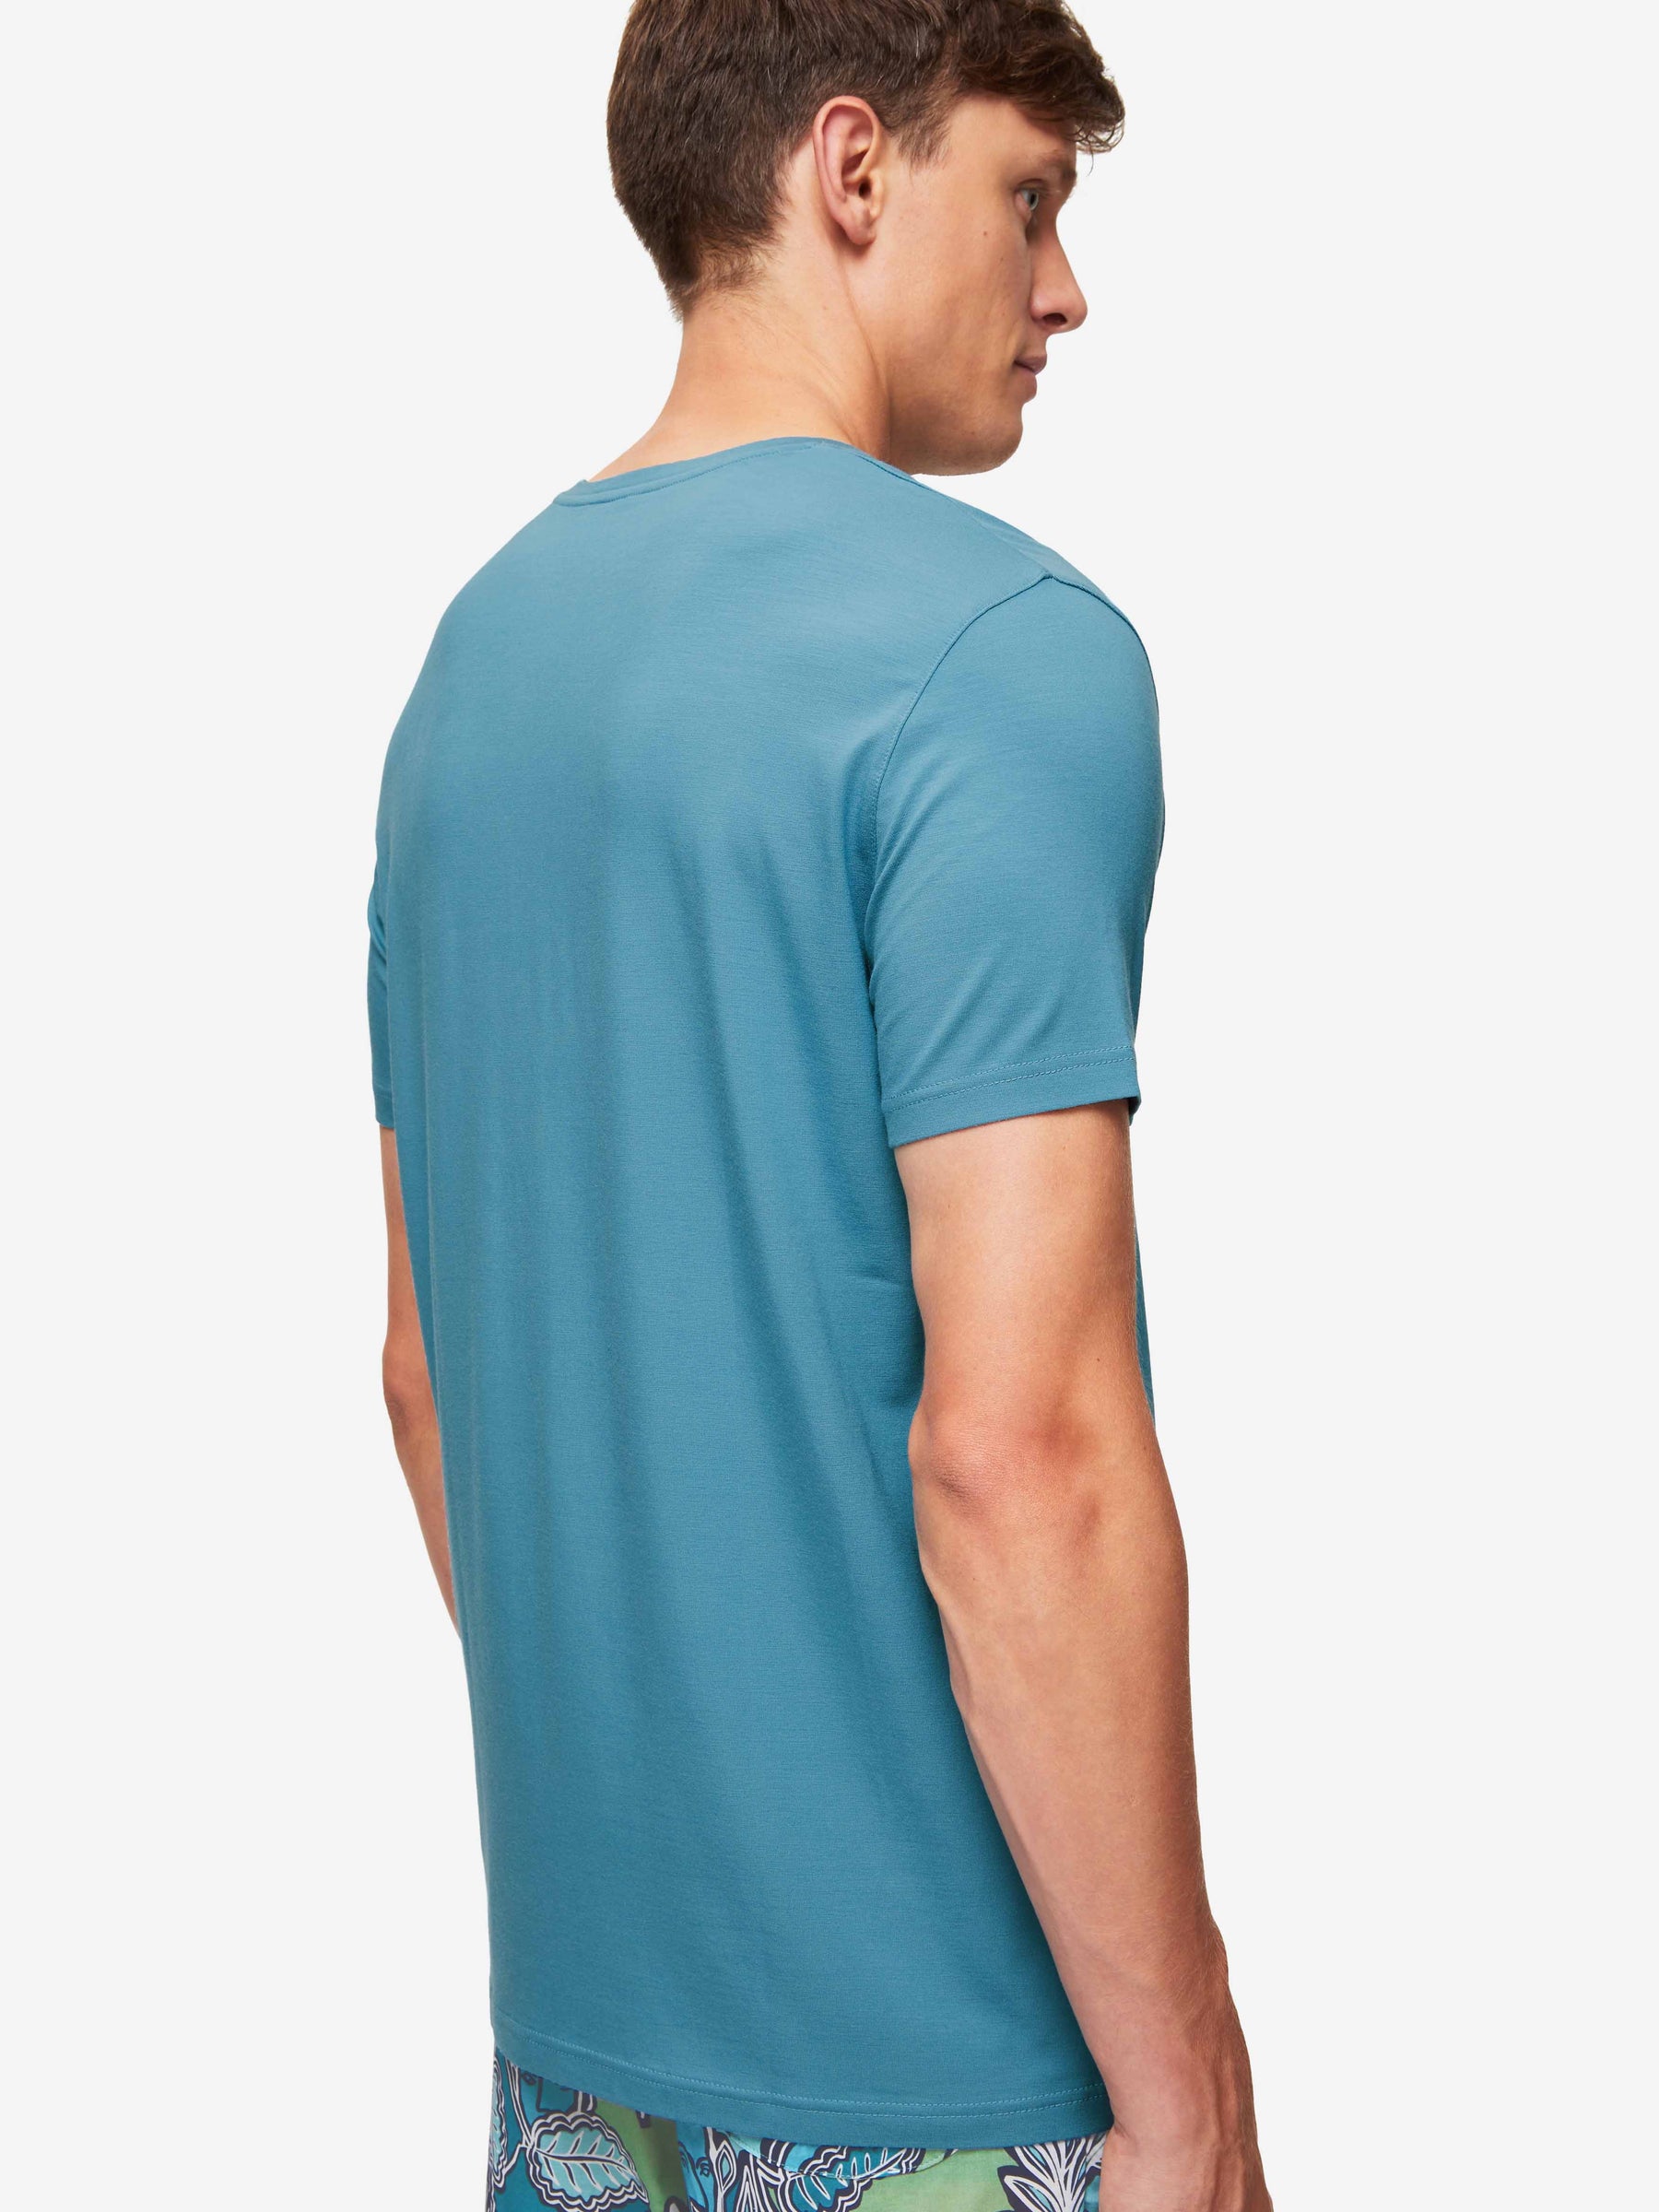 Men's T-Shirt Basel Micro Modal Stretch Harbour Blue